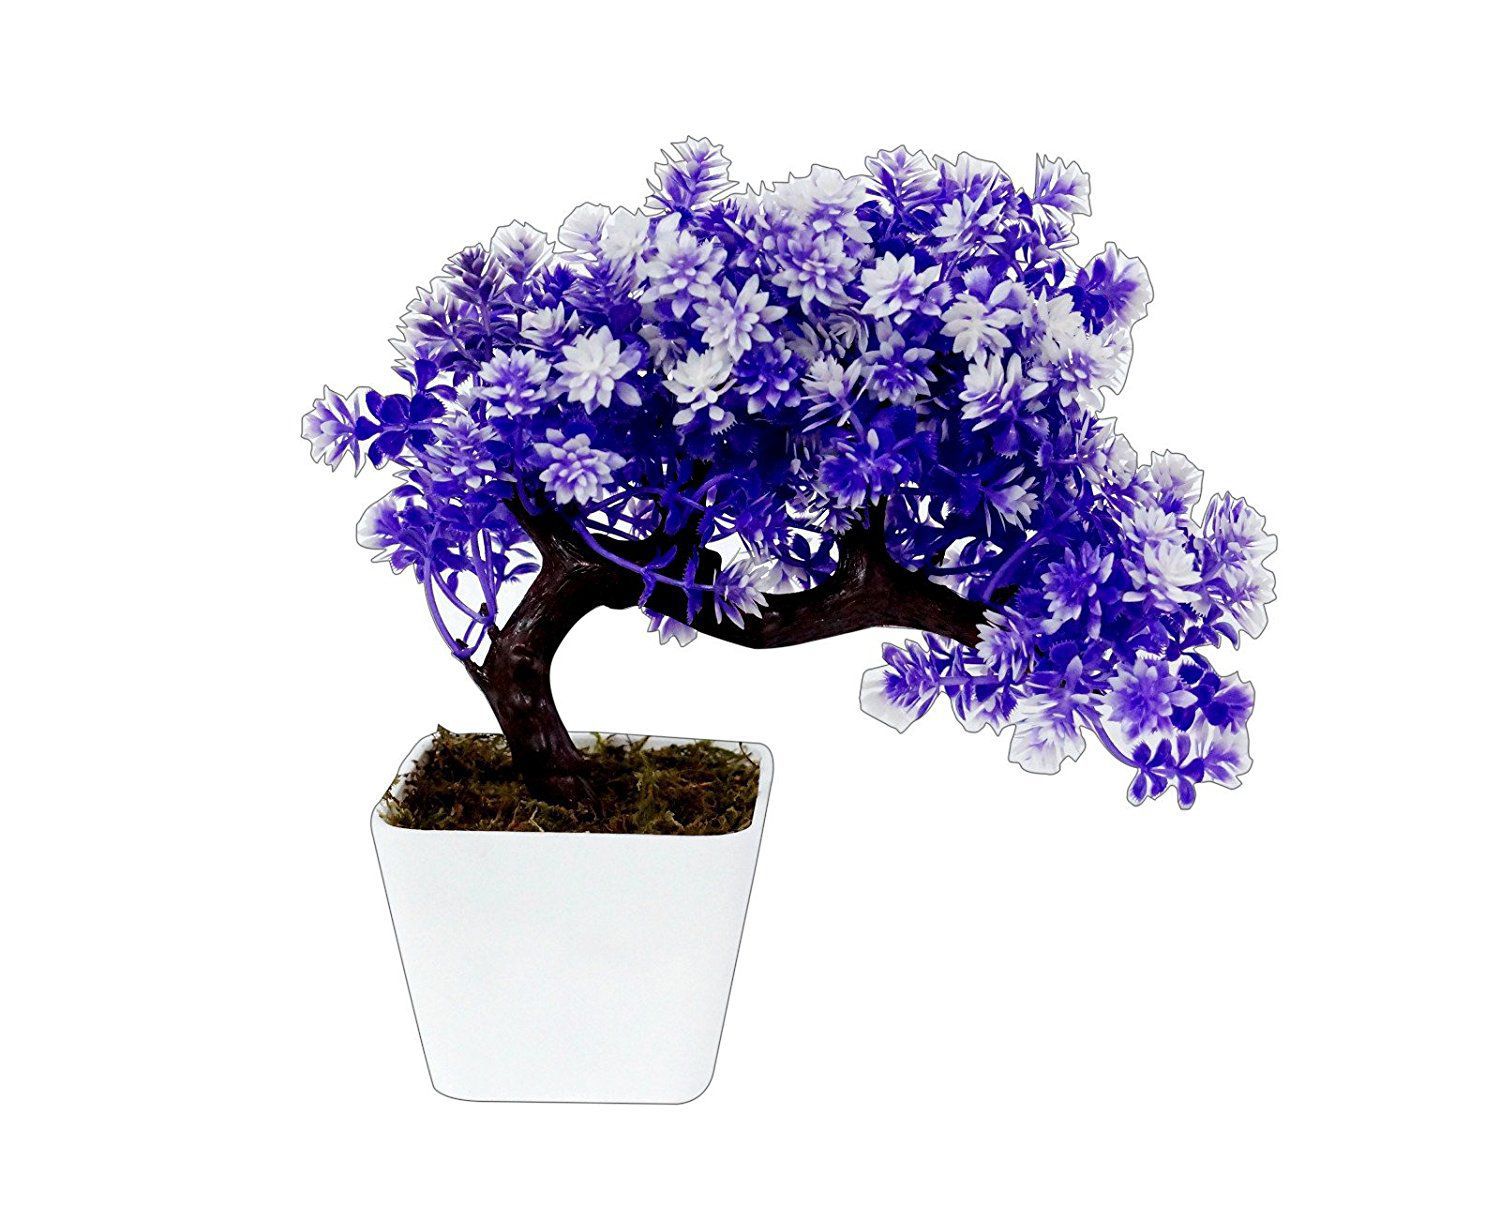     			YUTIRITI Bonsai Tree White Flowers Purple Artificial Plants Bunch Plastic - Pack of 1